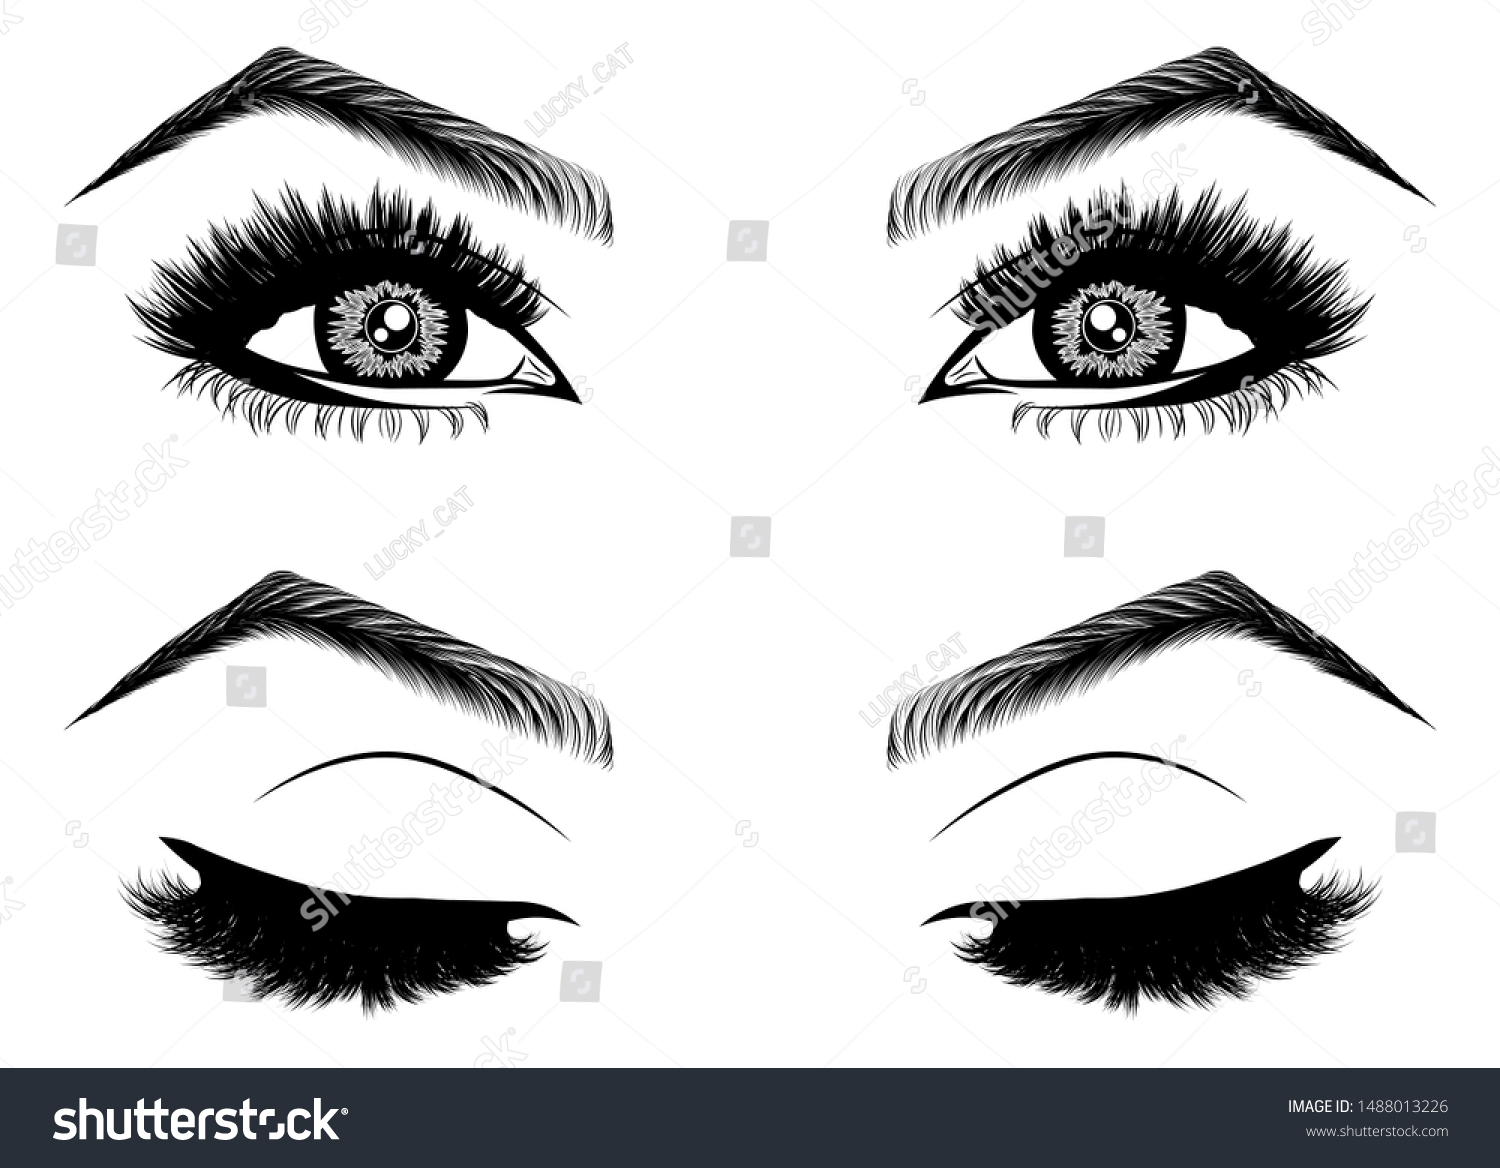 Illustration Womans Eyes Eyelashes Eyebrows Realistic Stock Vector Royalty Free 1488013226 6688